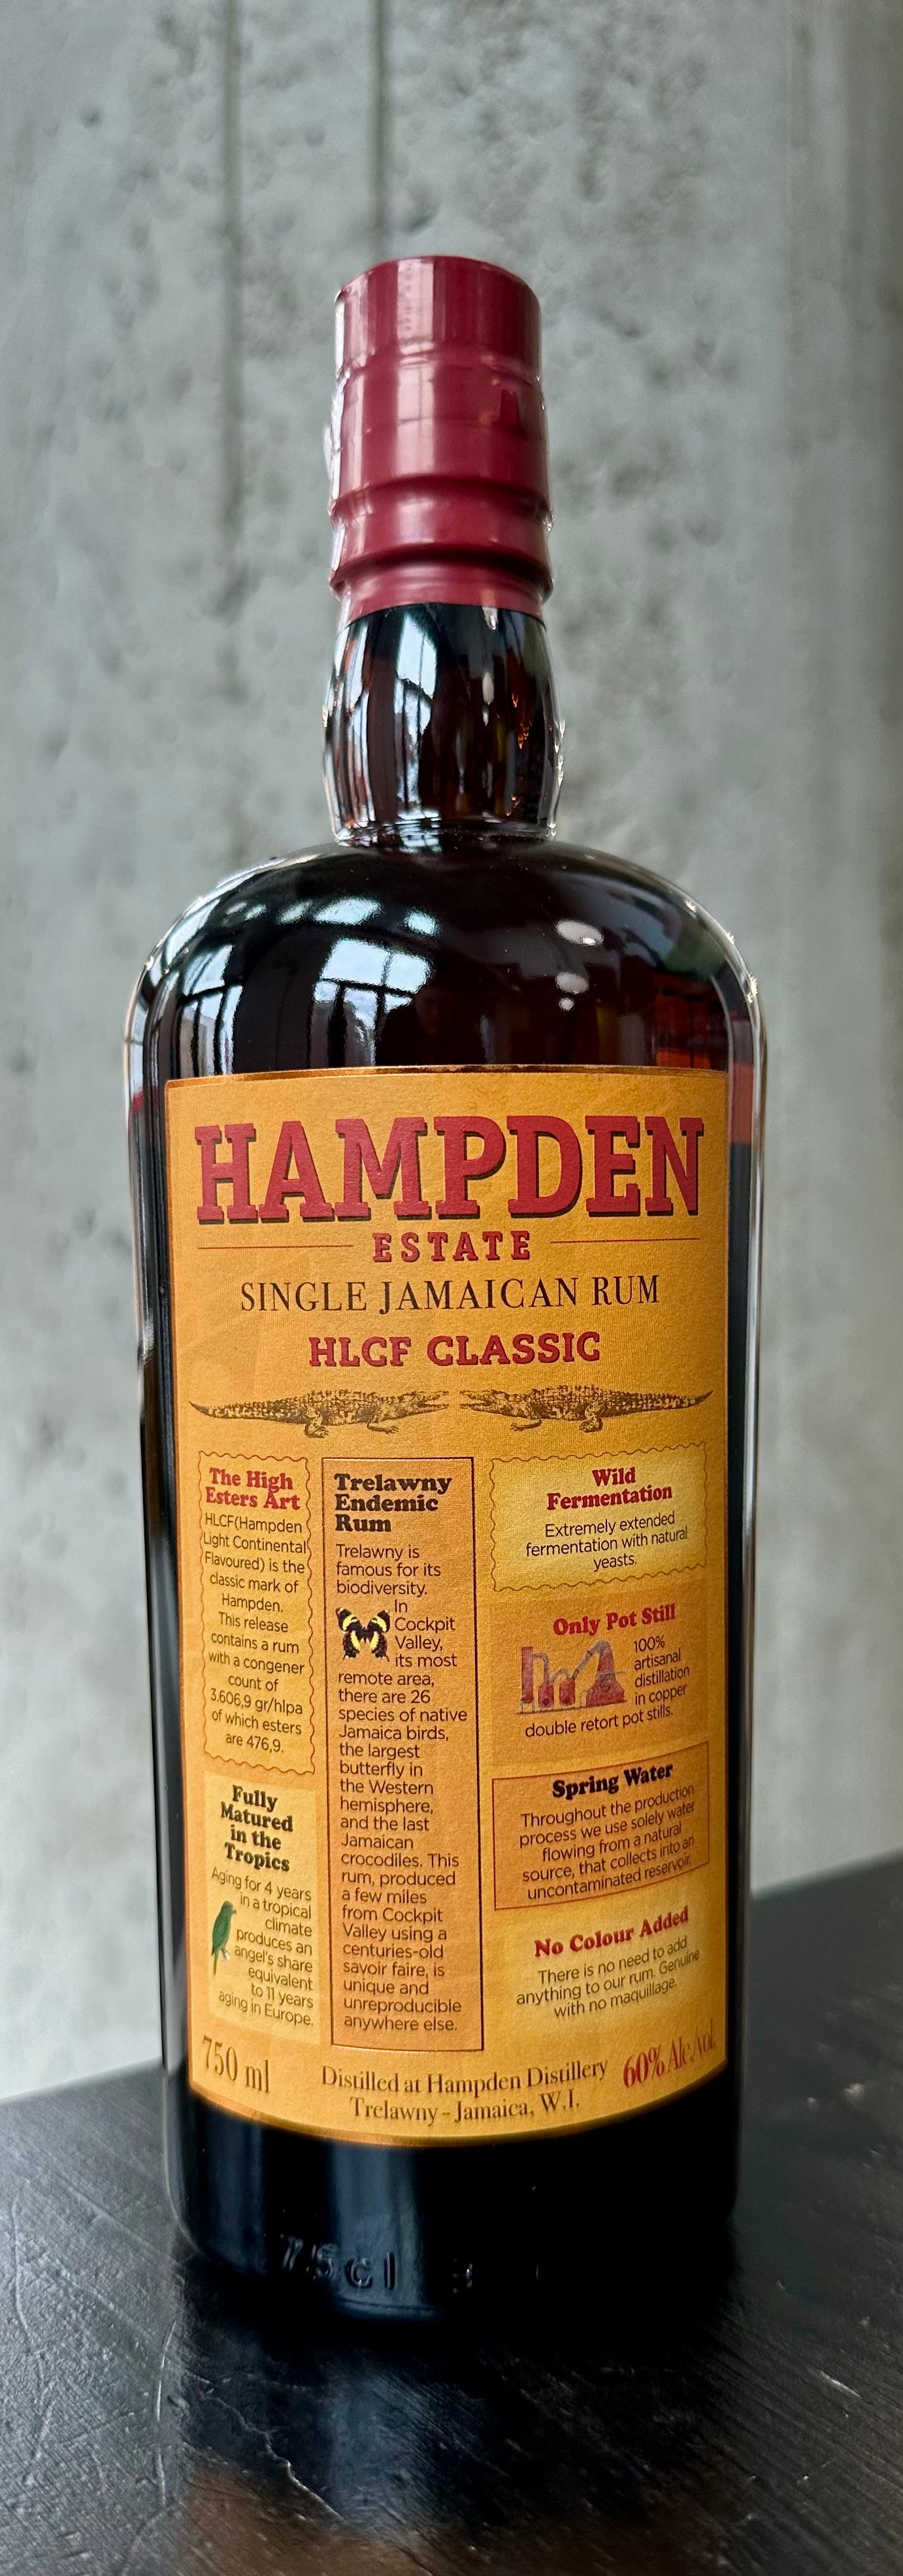 Hampden Estate "HLCF Classic" Single Jamaican Rum (120 proof)